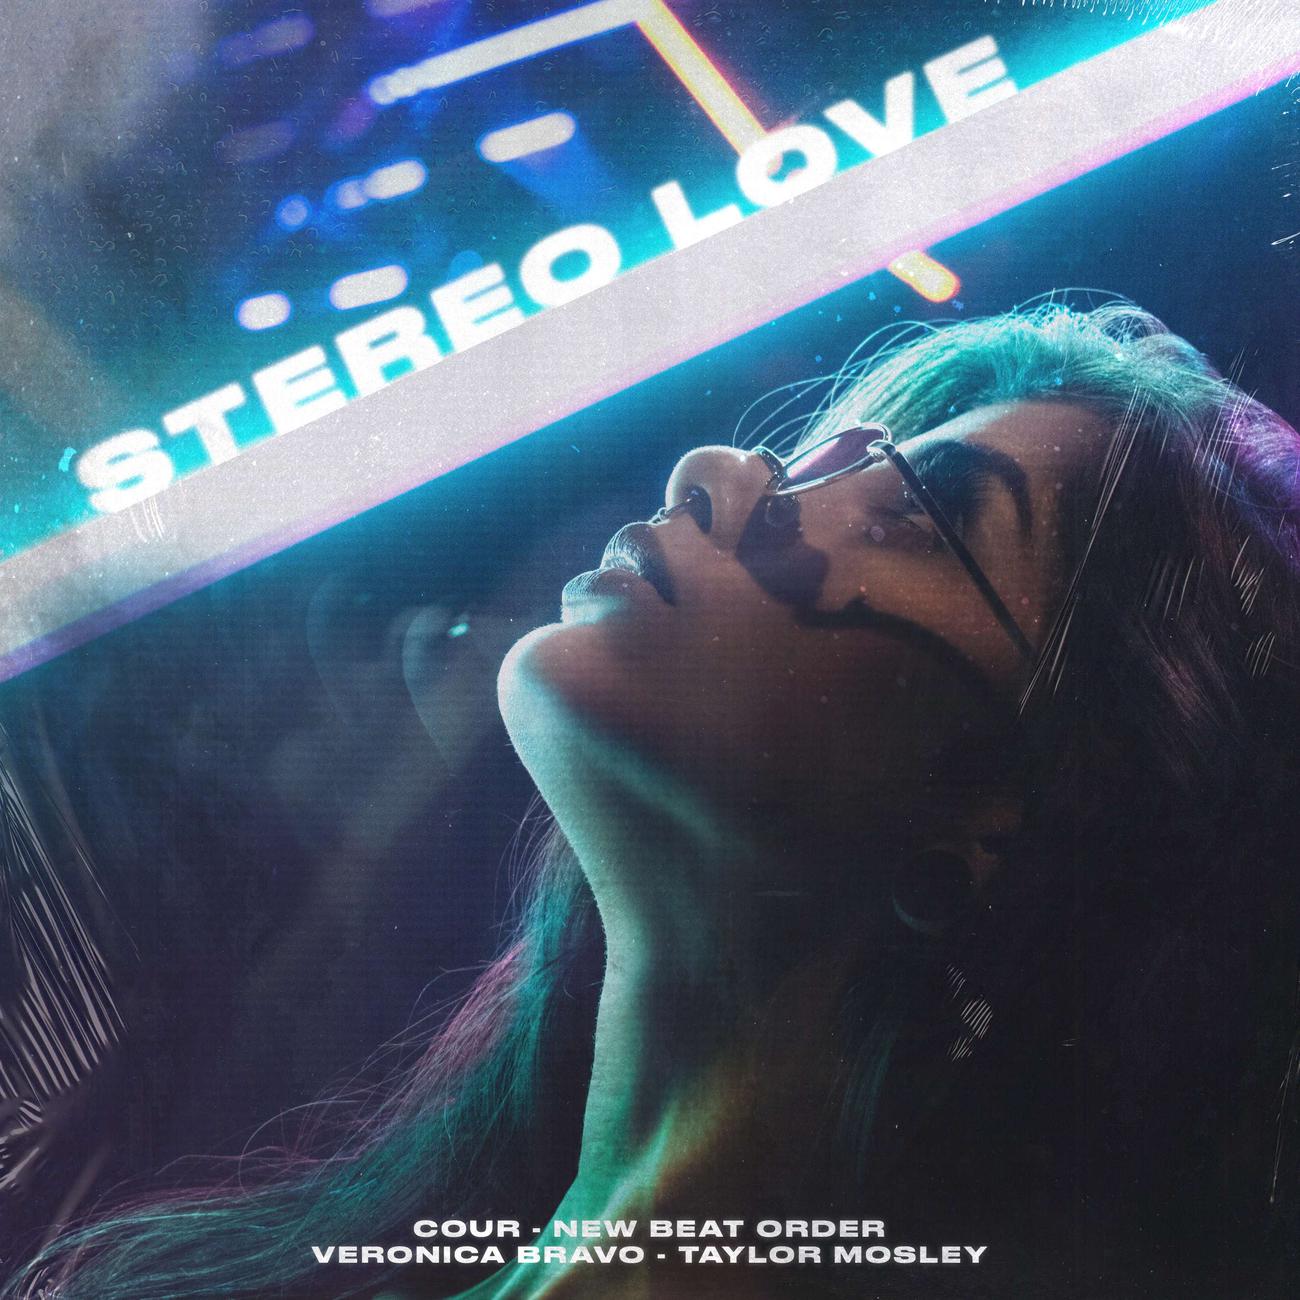 Постер альбома Stereo Love